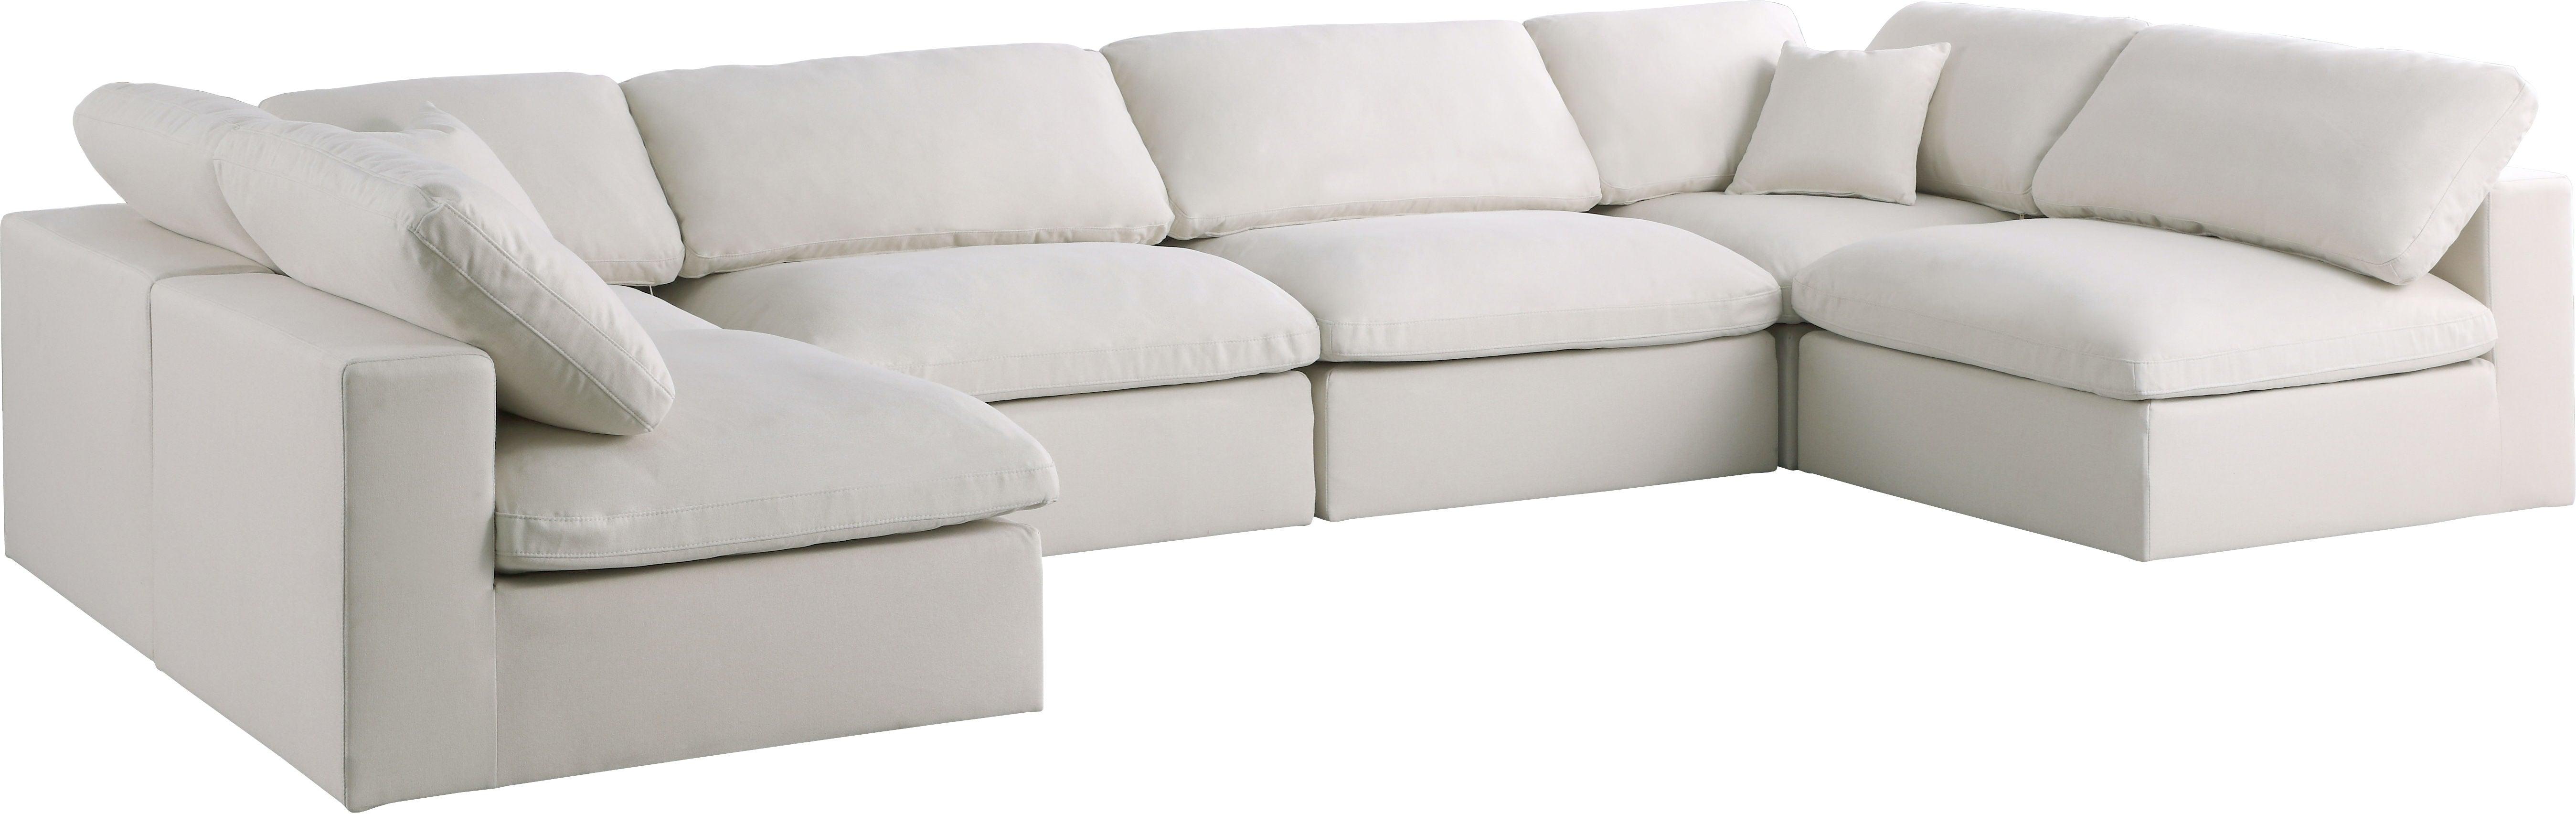 Meridian Furniture - Plush - Velvet Standart Comfort Modular Sectional 6 Piece - Cream - 5th Avenue Furniture